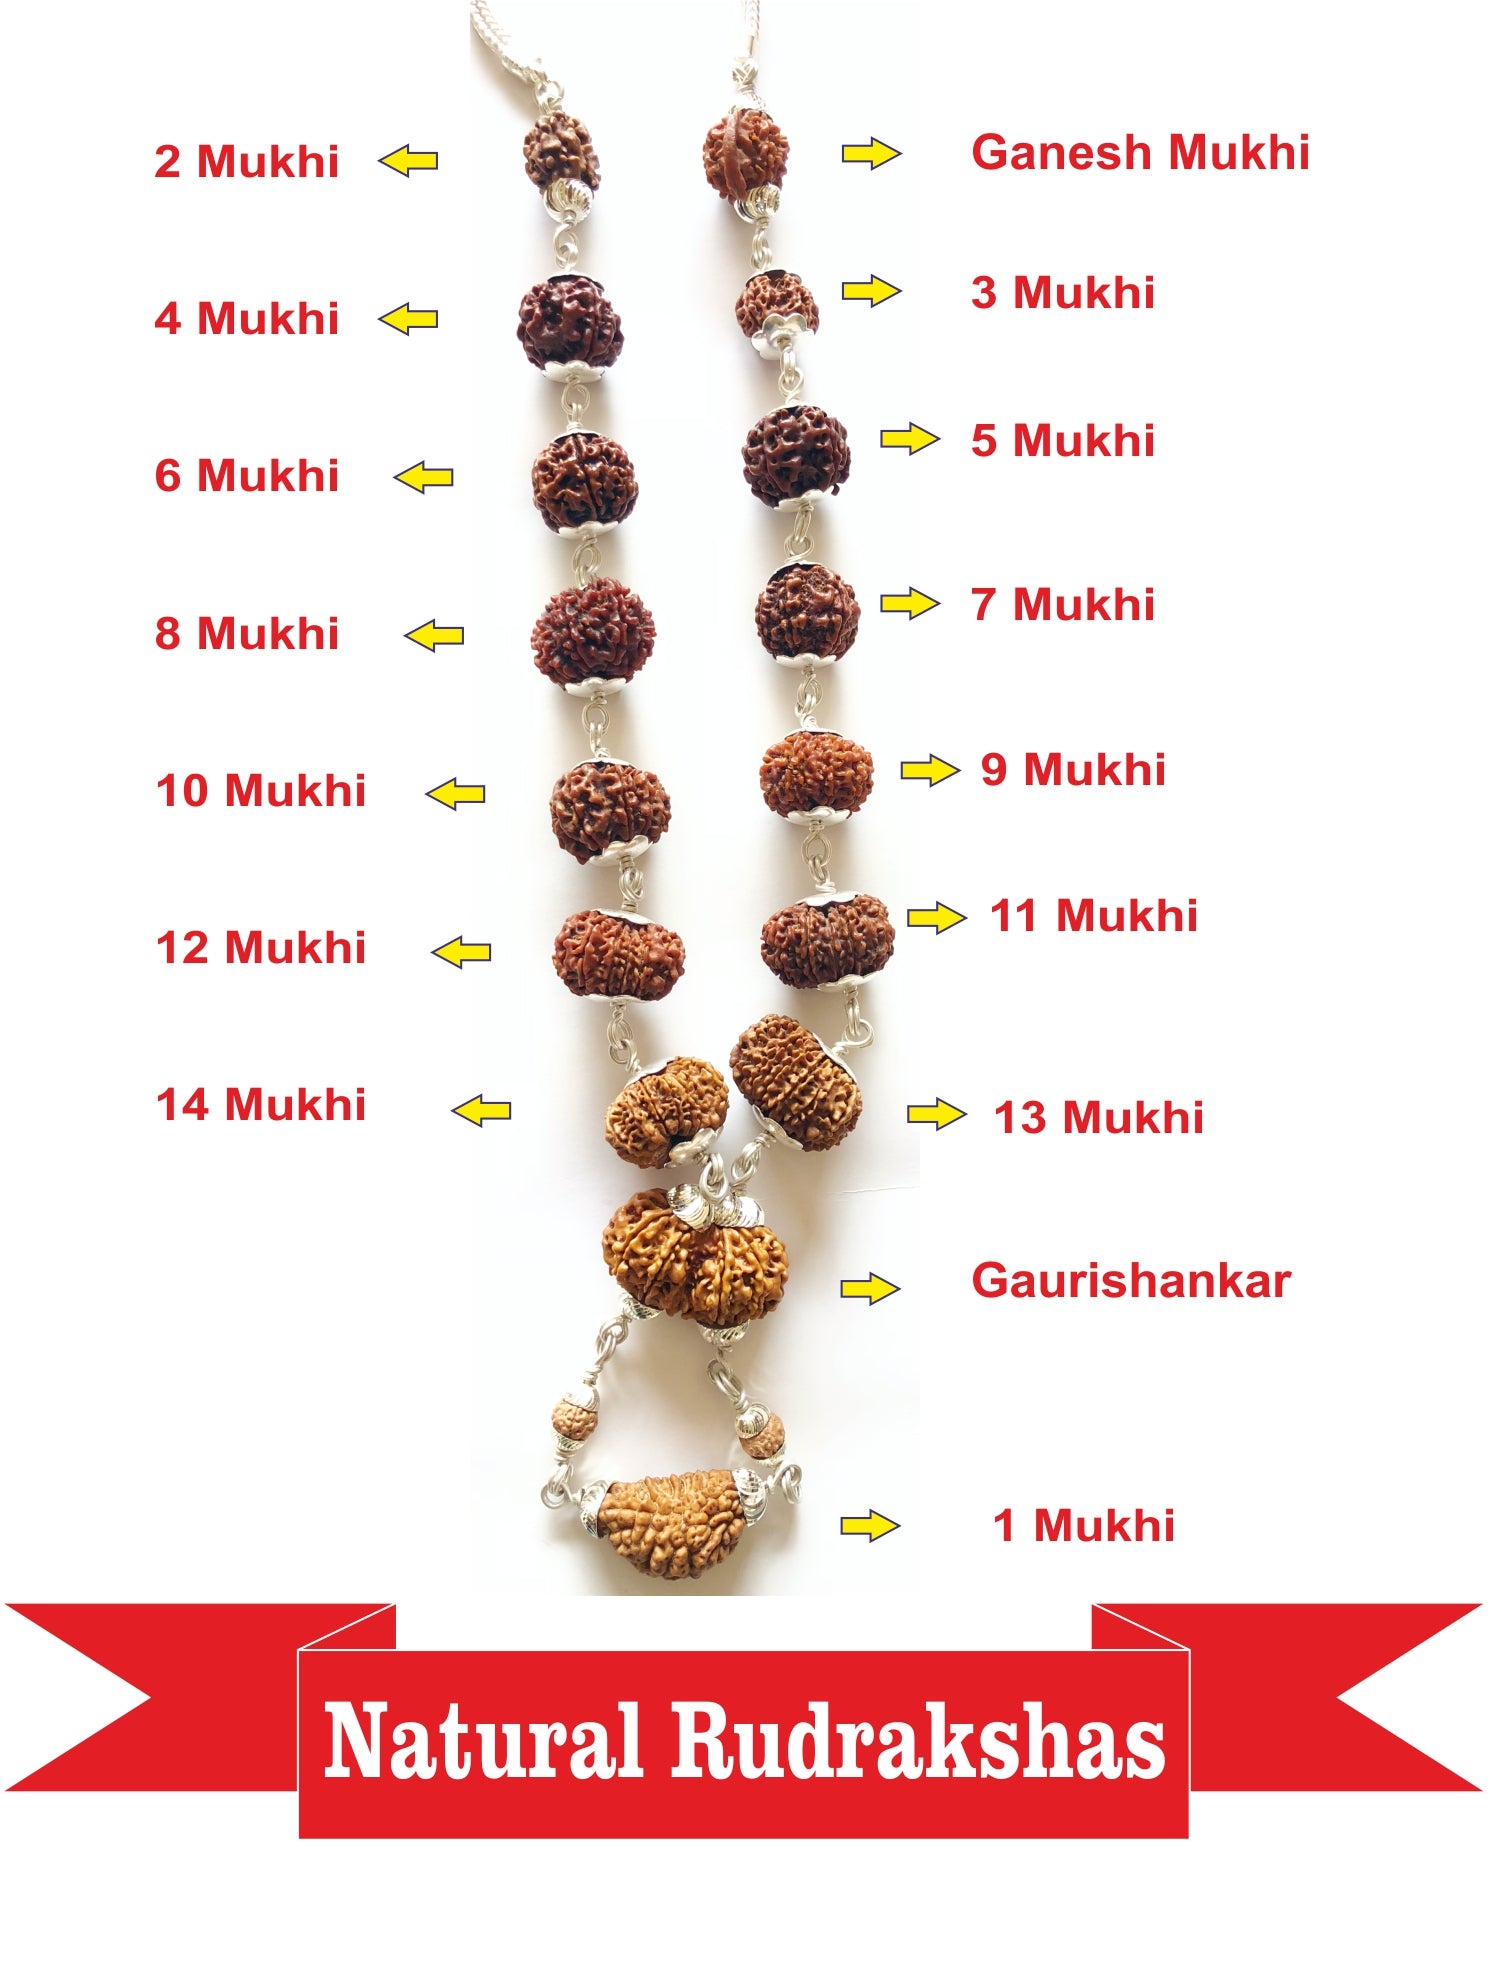 14 Mukhi Nepal Rudraksha Beads buy online from India USA UK CA